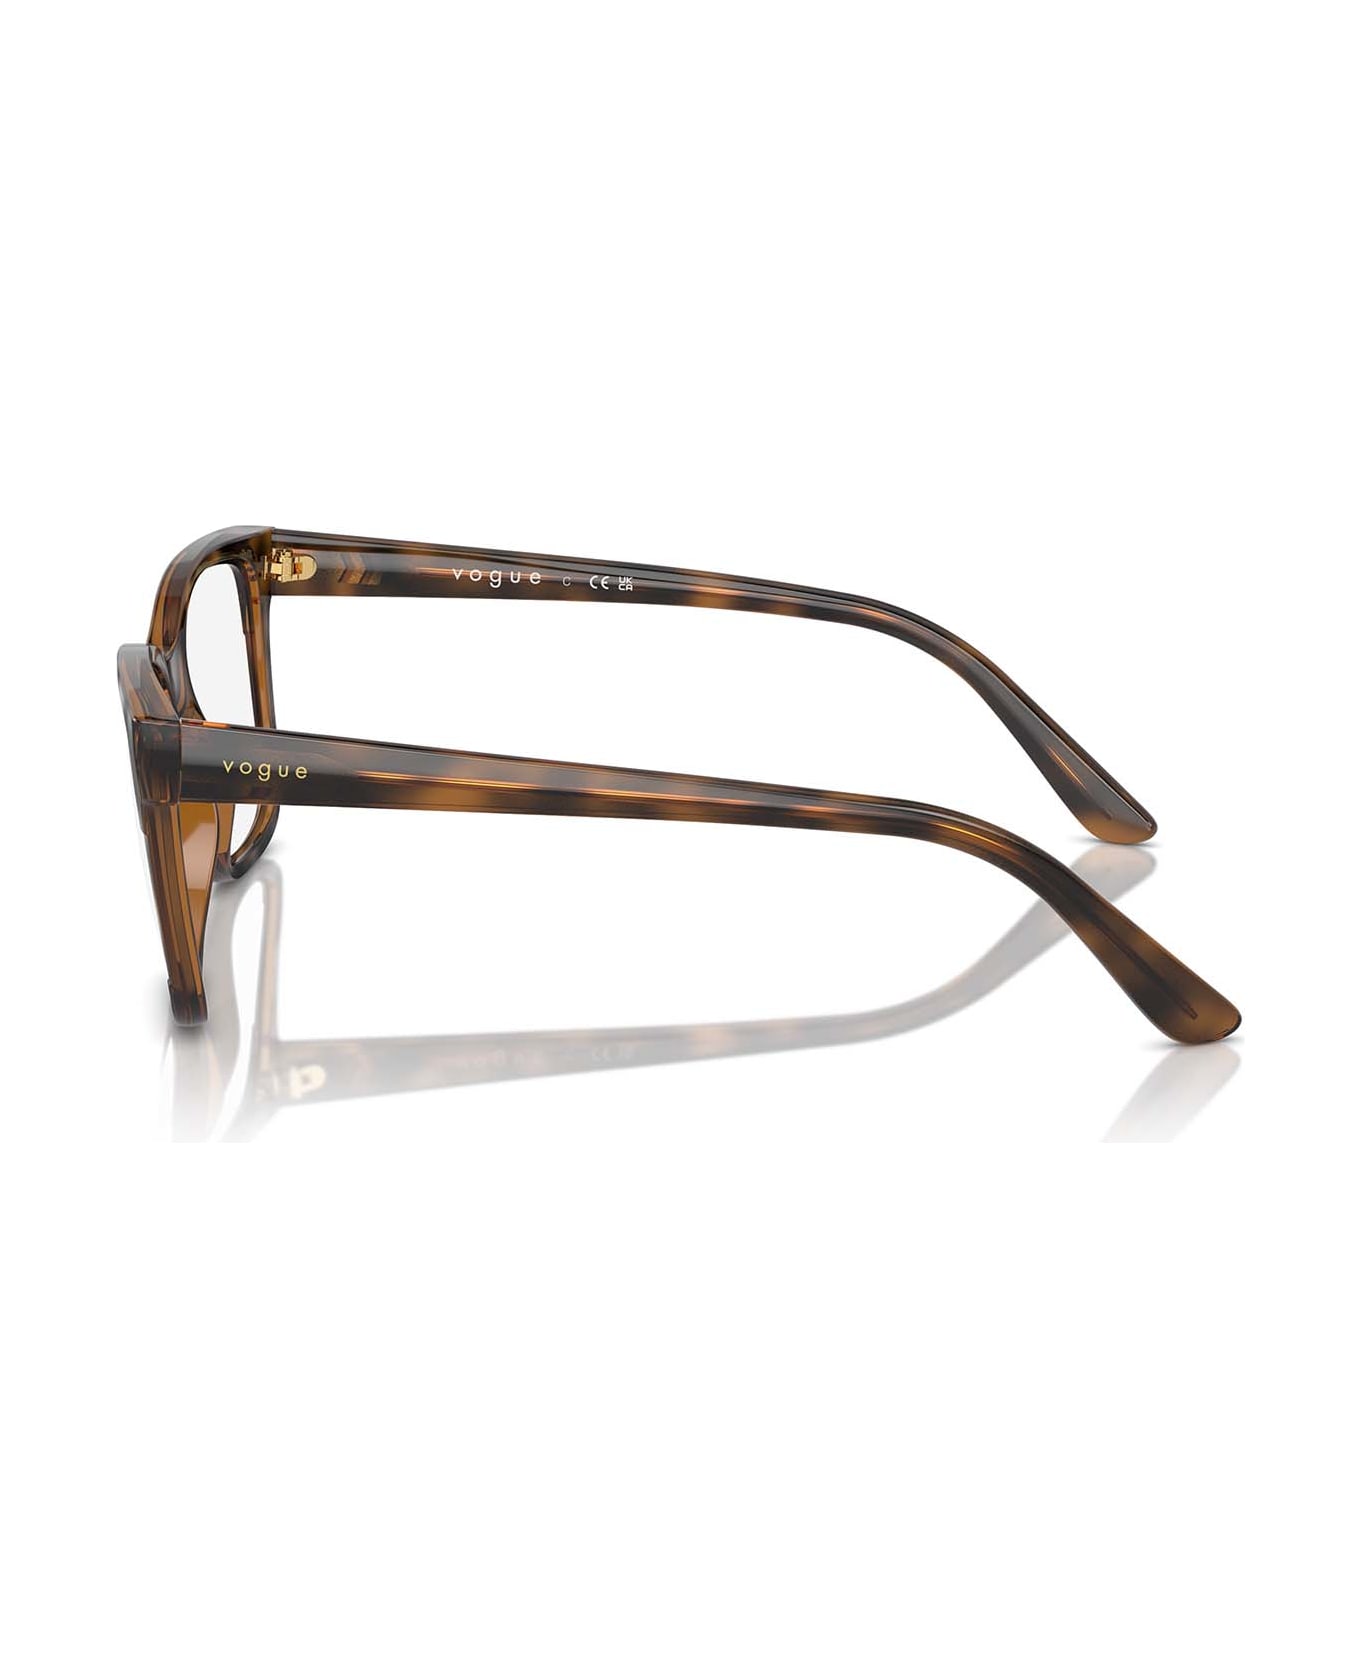 Vogue Eyewear Vo5556 Top Dark Havana / Light Brown Glasses - Top Dark Havana / Light Brown